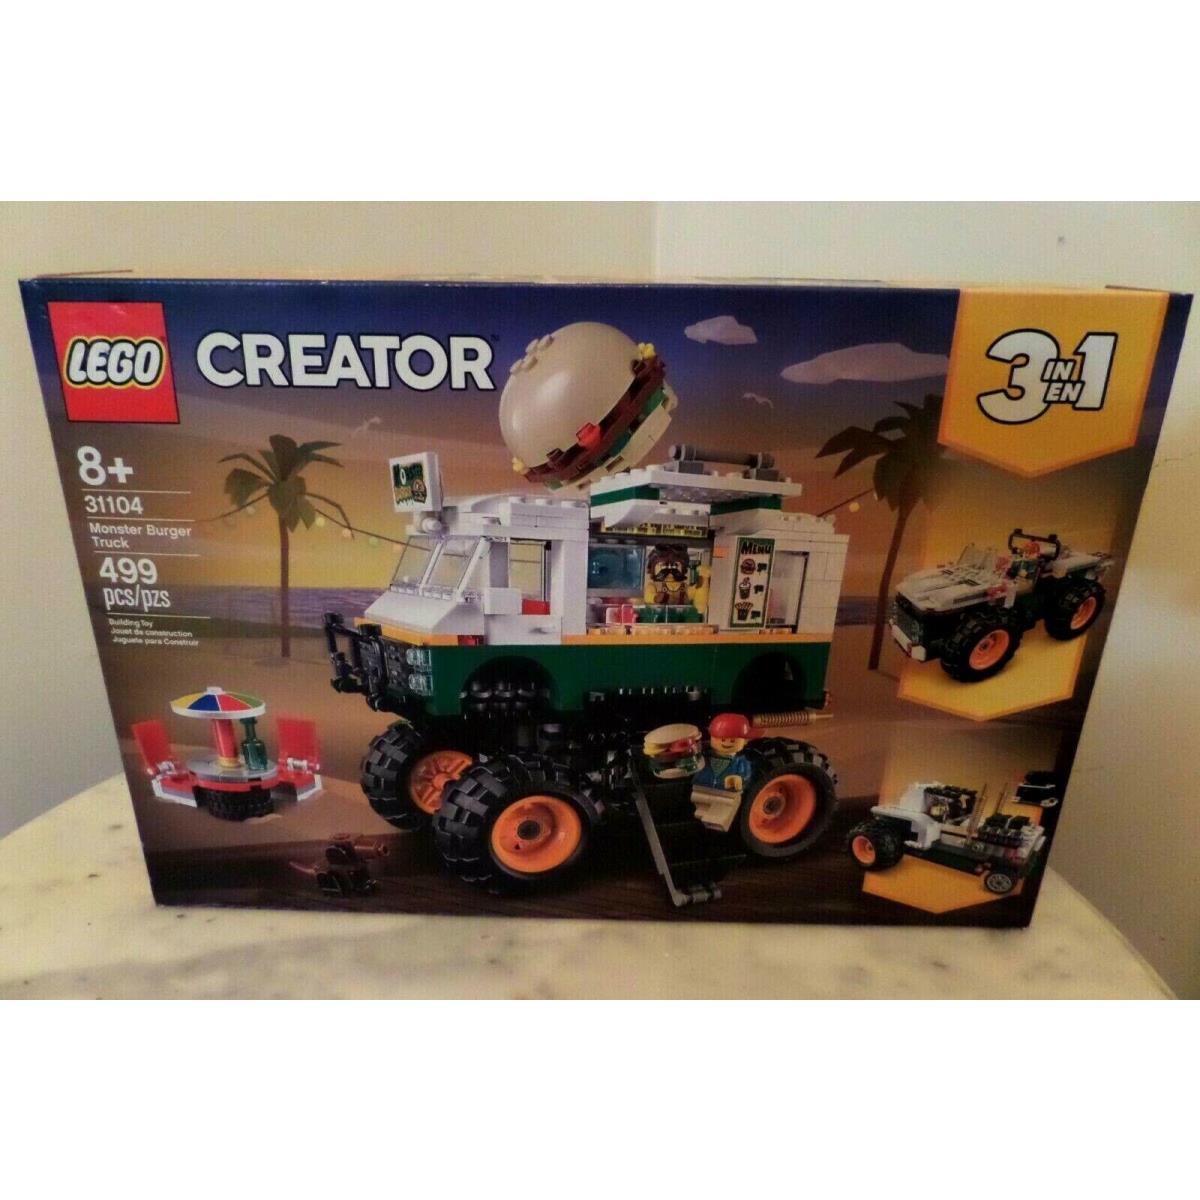 Lego Creator Monster Burger Truck 499 Pcs / Pzs 3 in 1 Vehicles